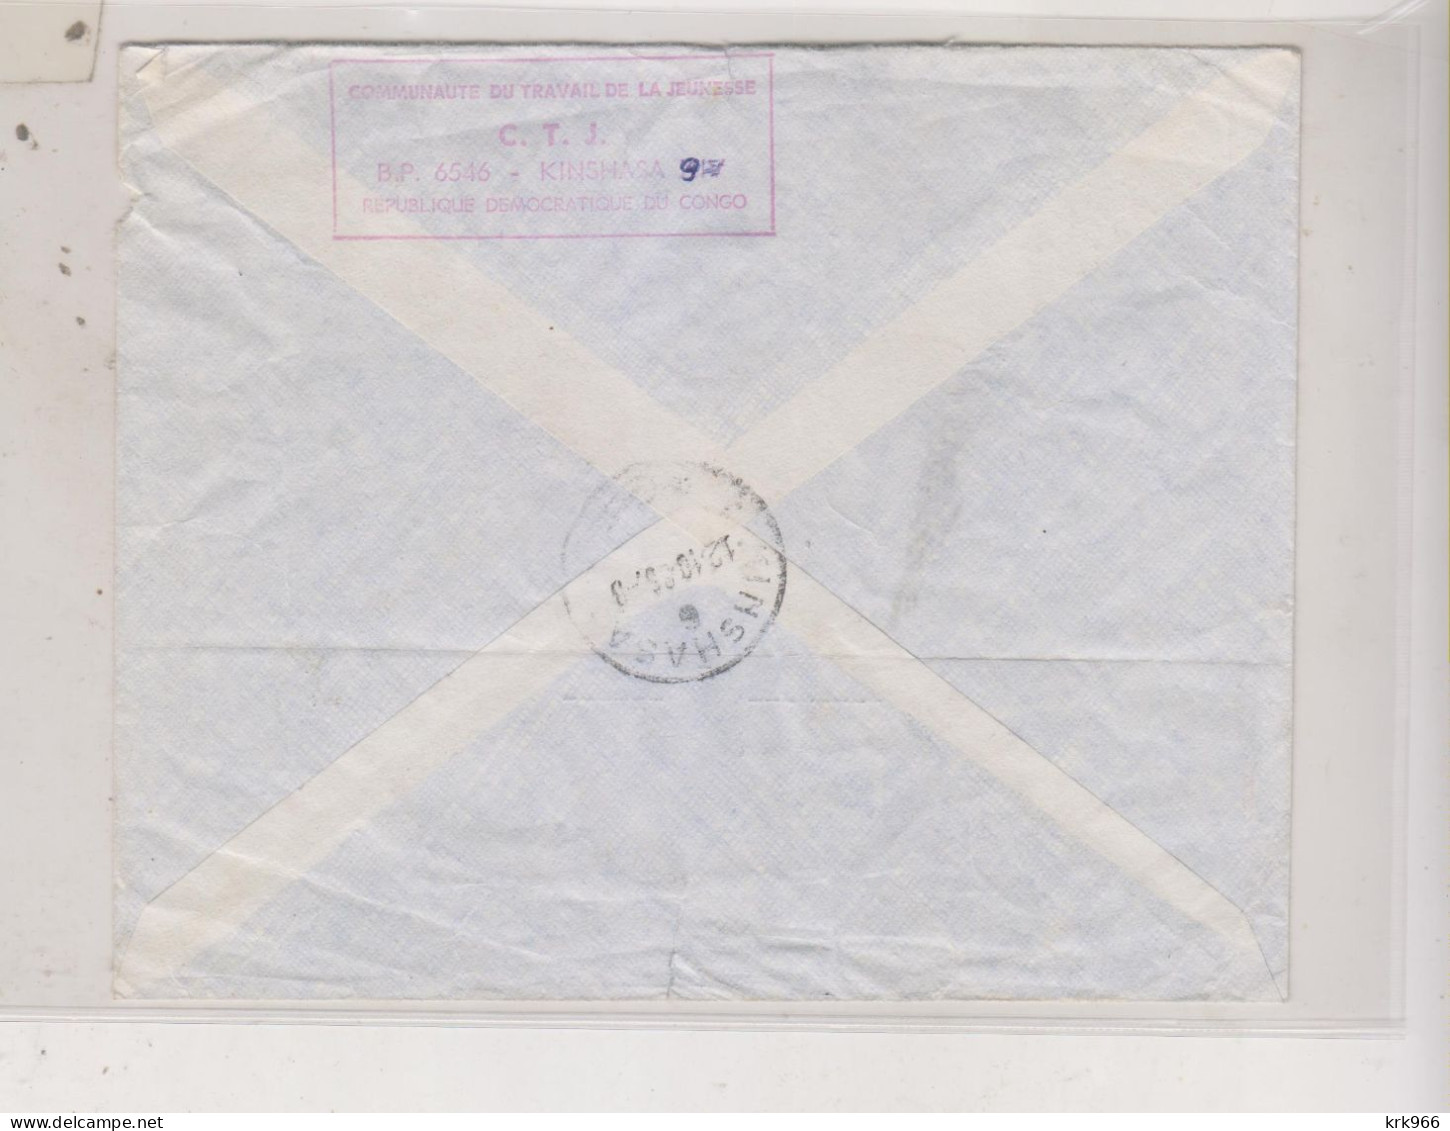 CONGO KINSHASA LEOPOLDVILLE 1966 Registered   Airmail Cover To Austria - Cartas & Documentos